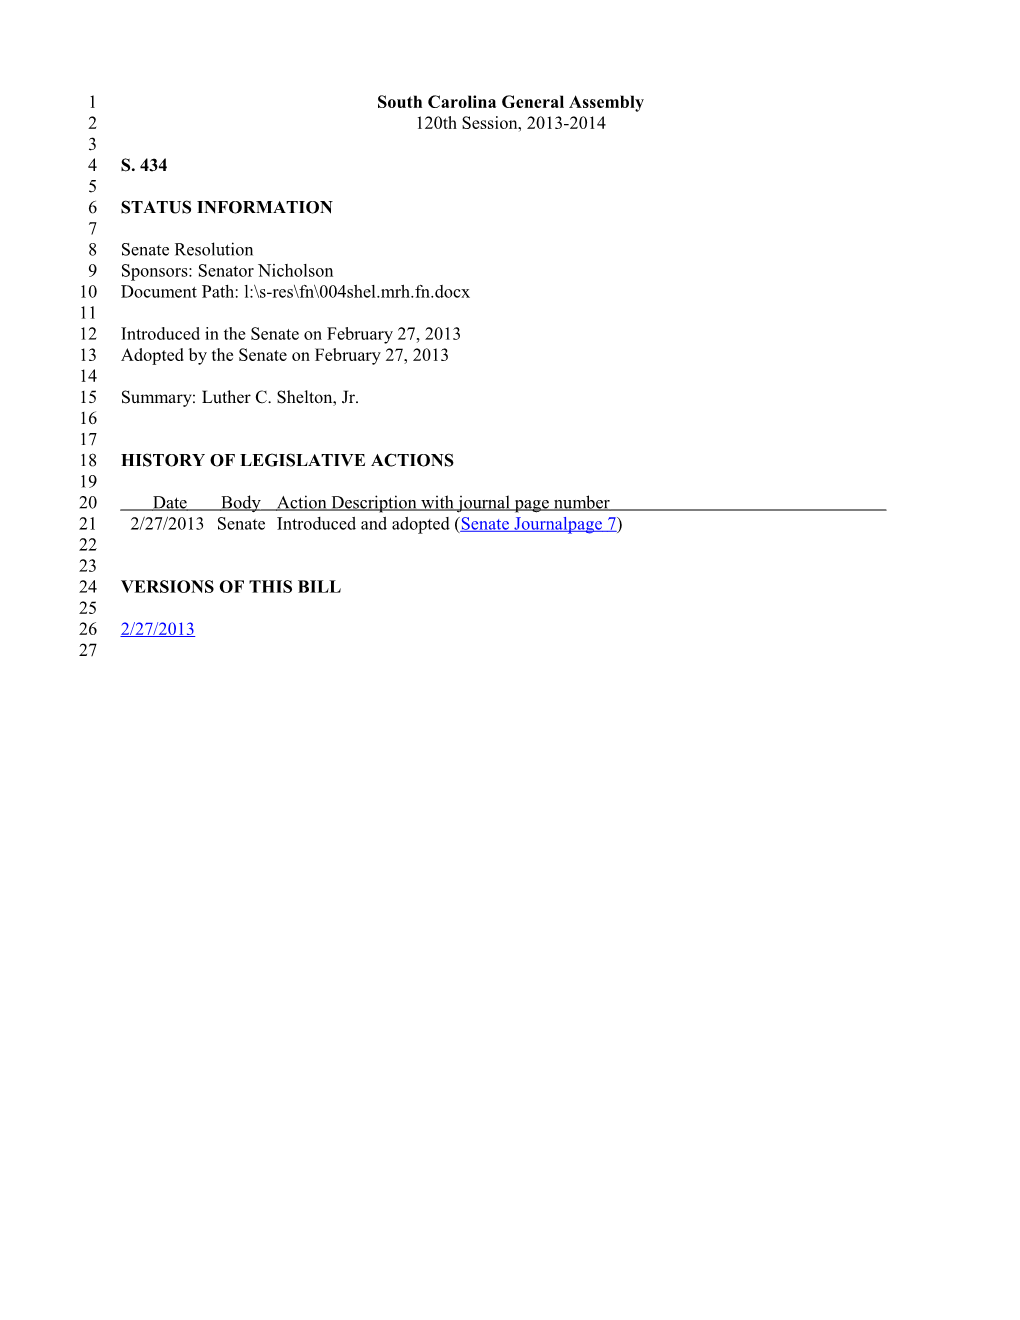 2013-2014 Bill 434: Luther C. Shelton, Jr. - South Carolina Legislature Online